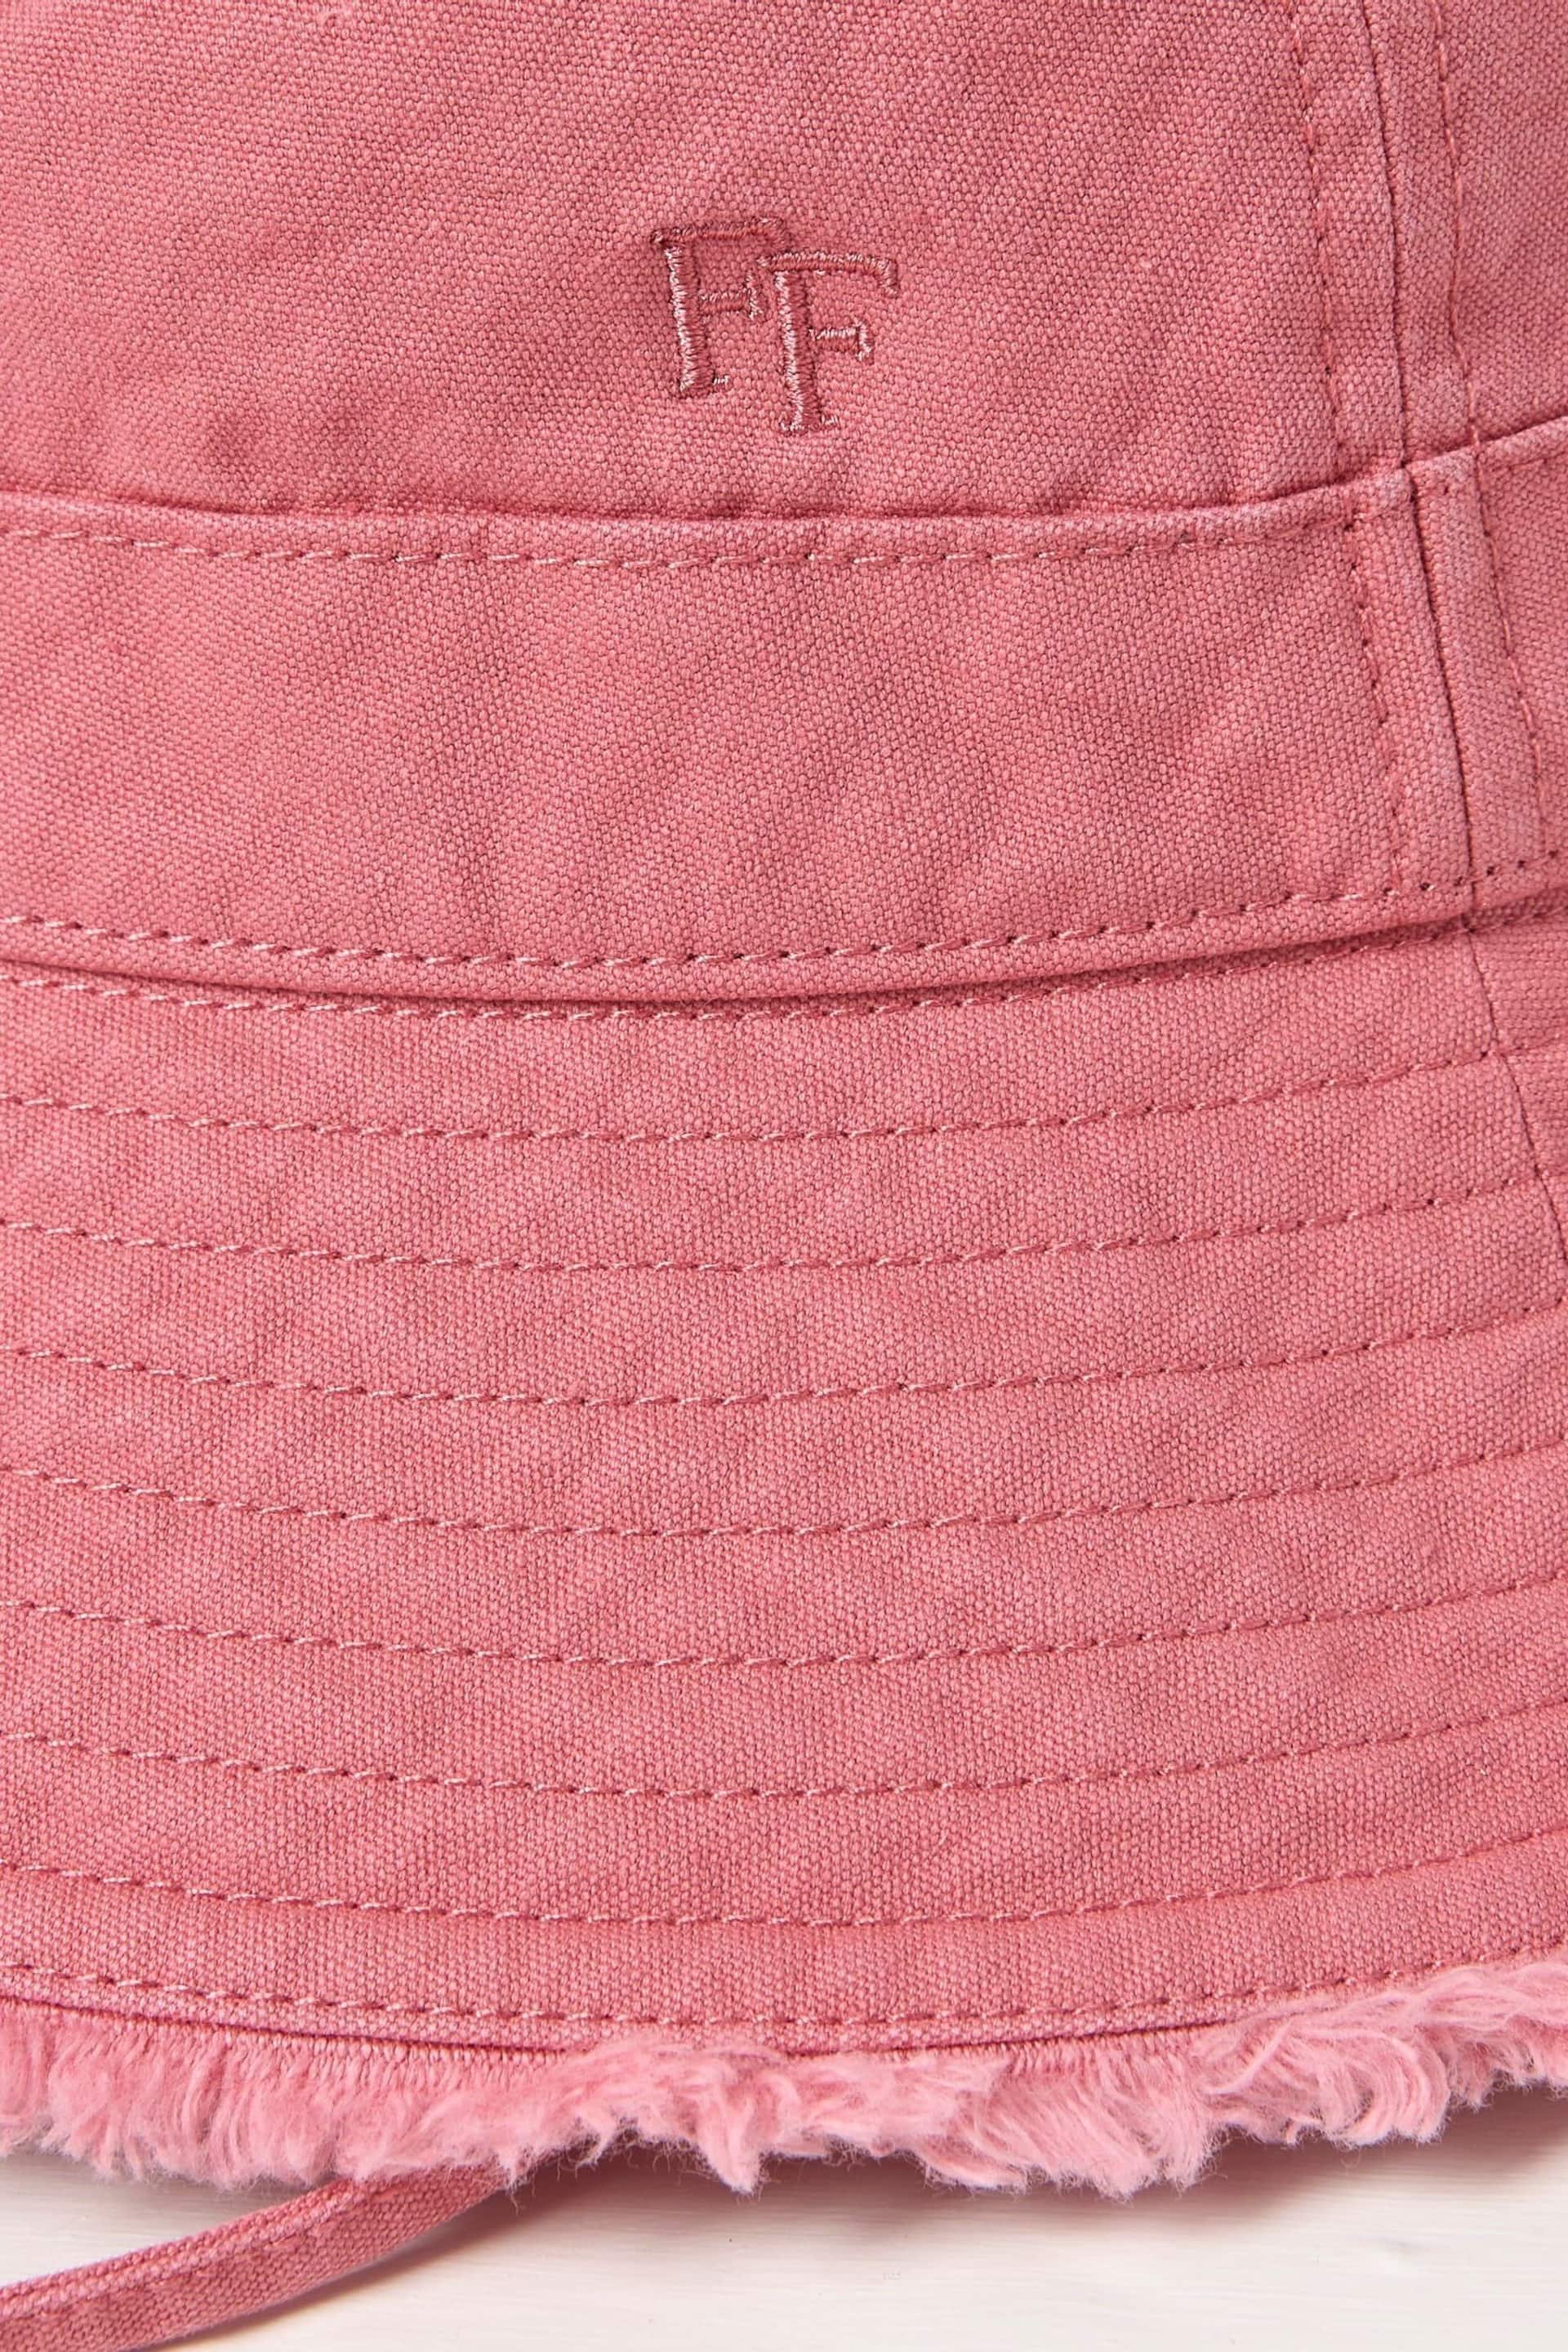 FatFace Pink Brisbane Bucket Hat - Image 3 of 3